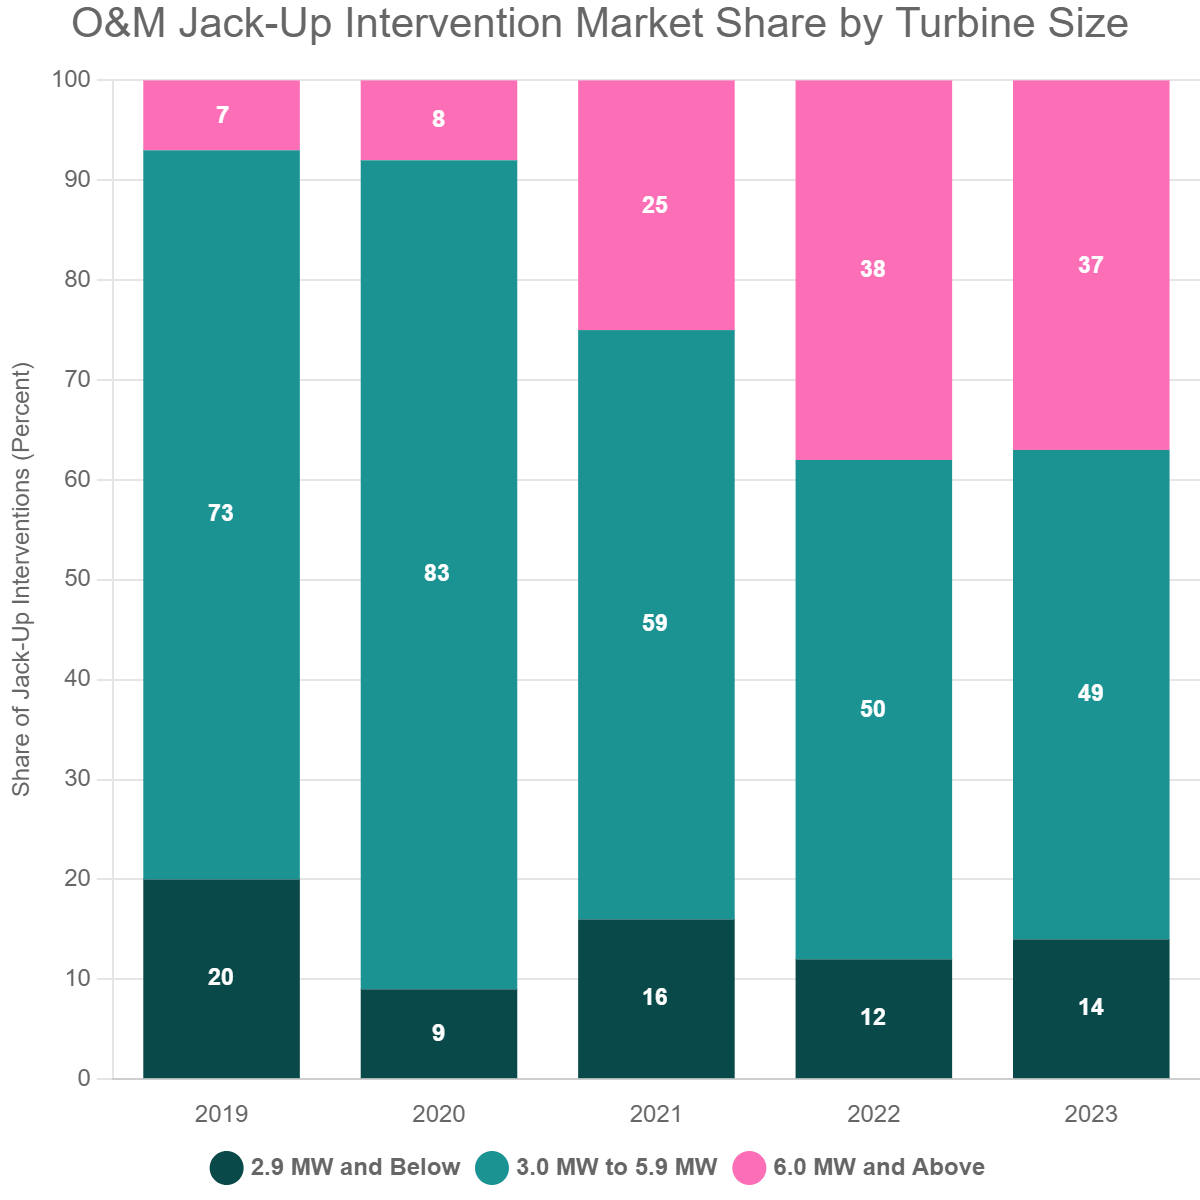 O&M Jack-Up Intervention Market Share by Turbine Size